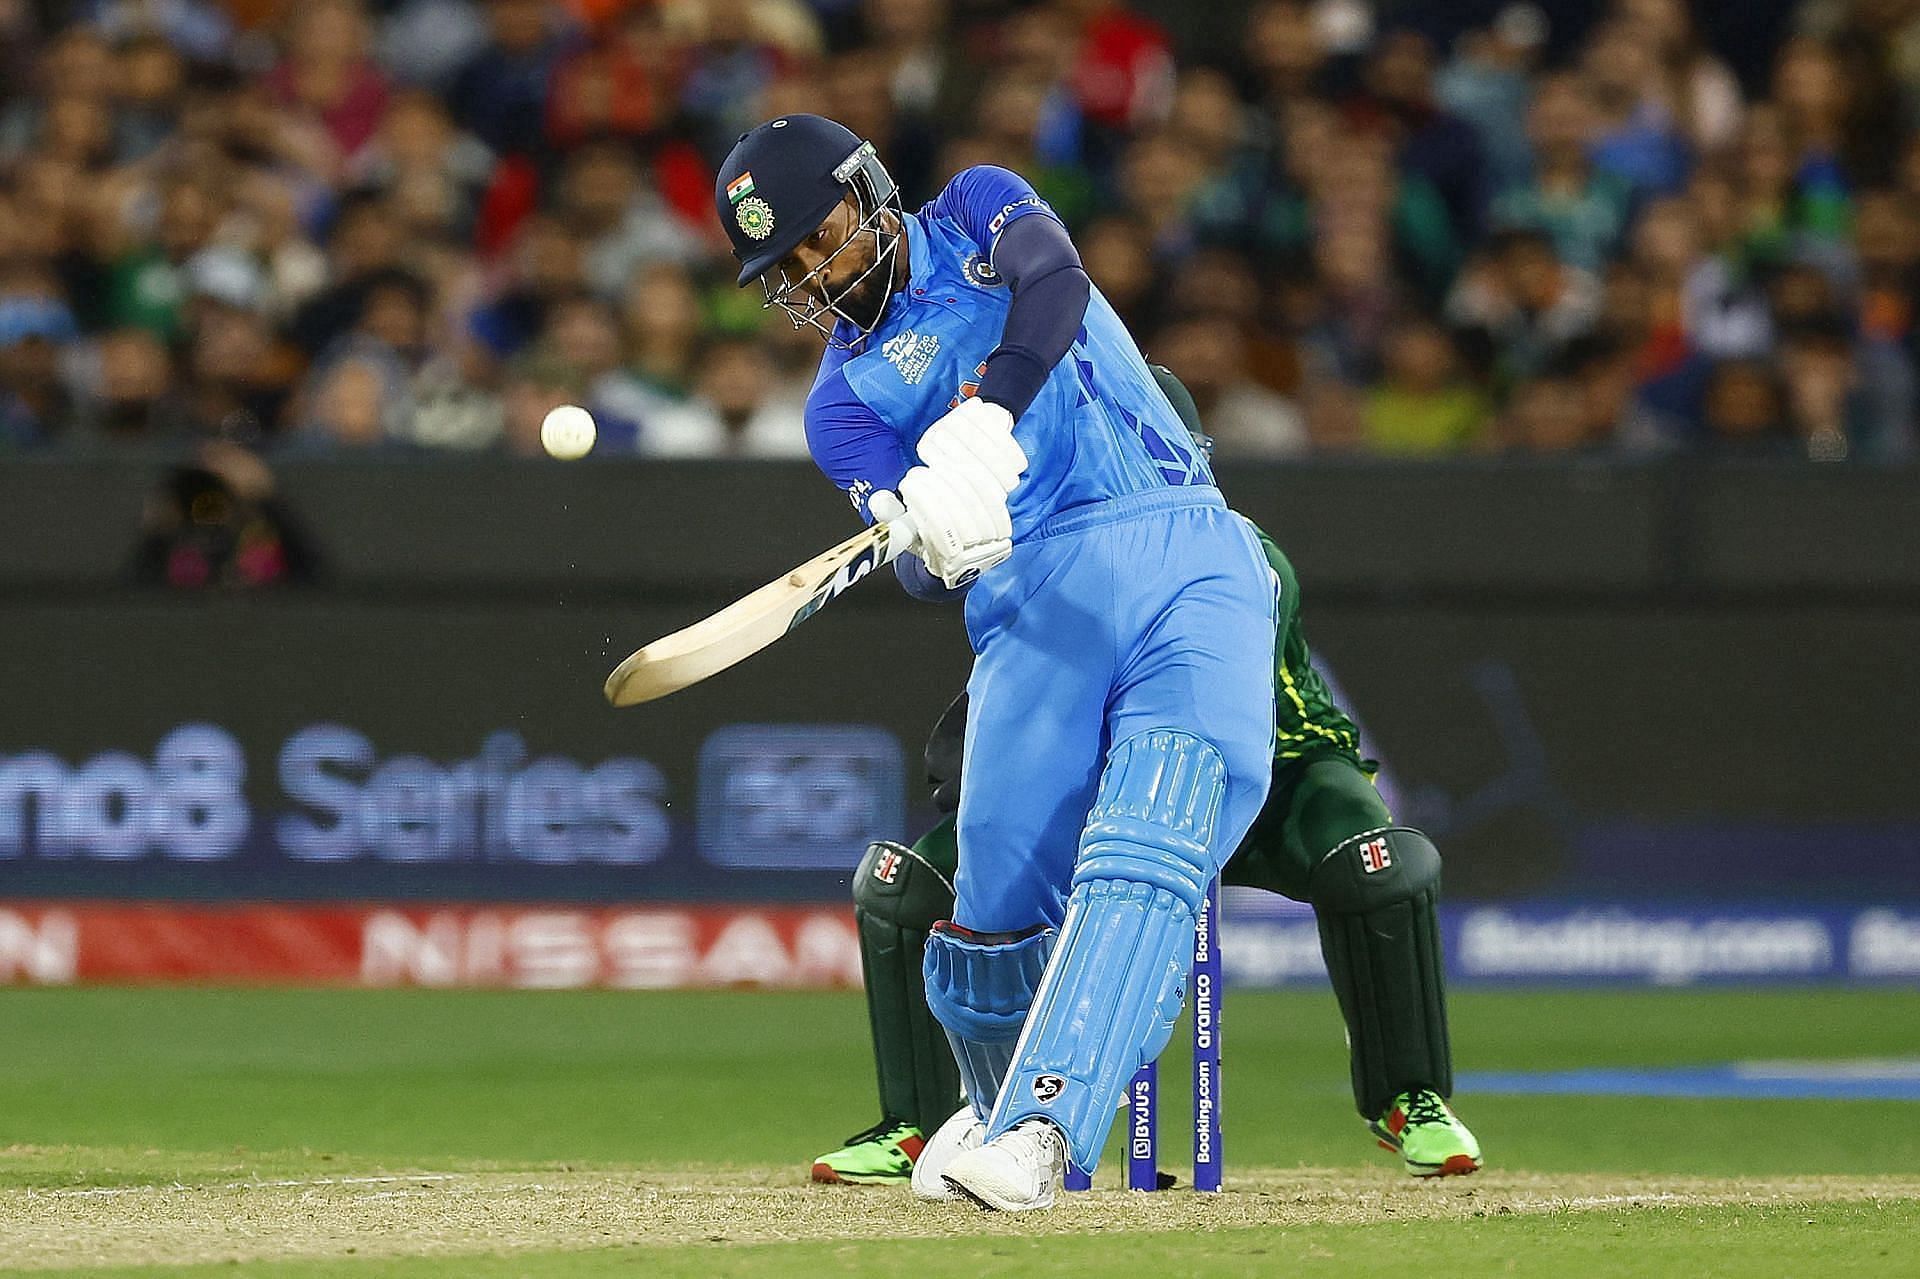 Hardik-Pandya-of-India-bats-during-the-ICC-Men-s-T20-World-Cup-match-between-India-and-Pakistan.jpg (3000&times;1999)